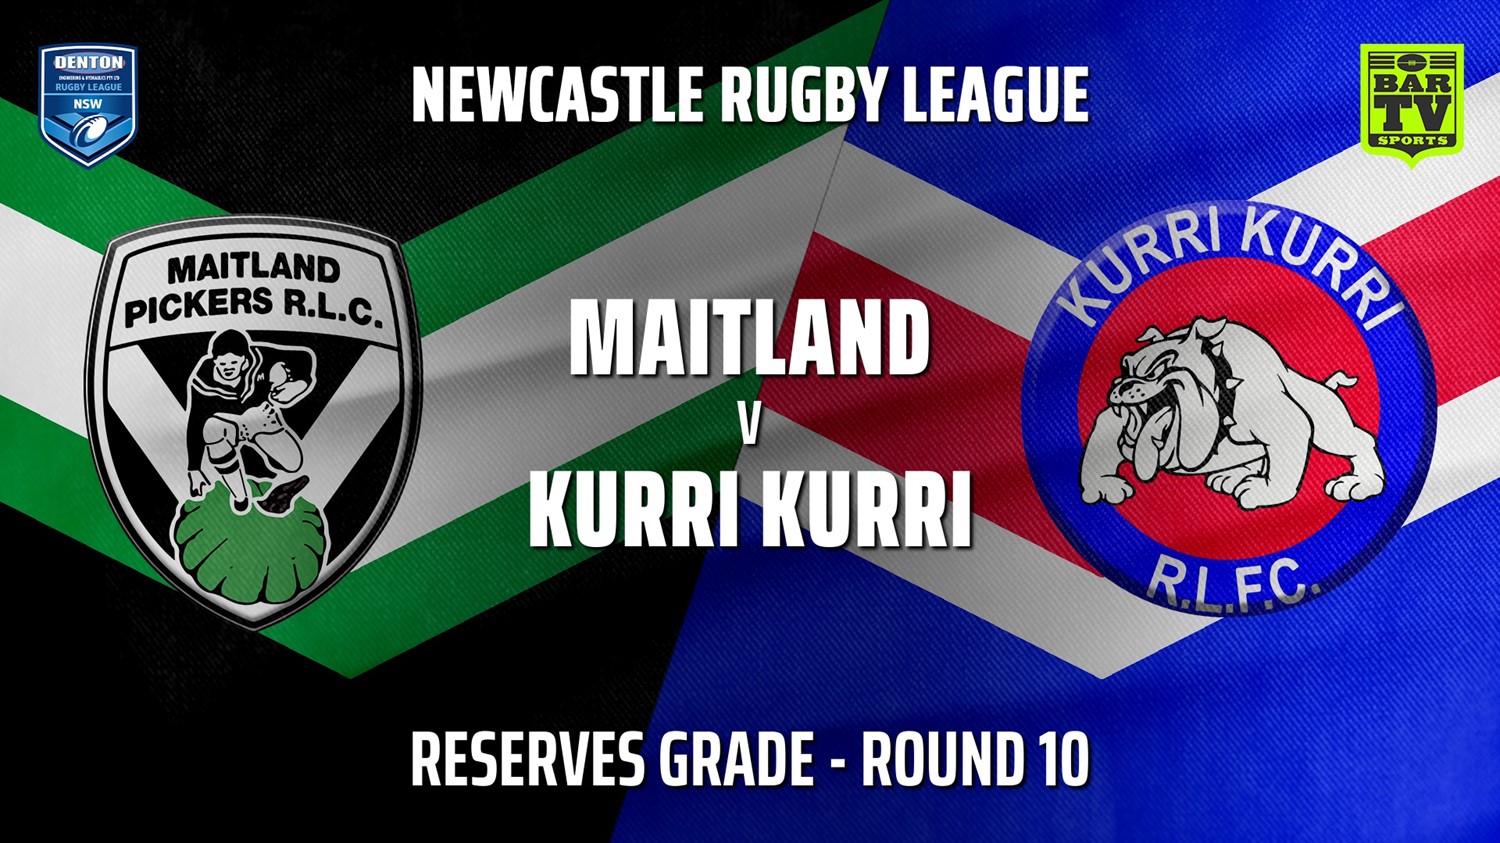 210605-Newcastle Rugby League Round 10 - Reserves Grade - Maitland Pickers v Kurri Kurri Bulldogs Slate Image